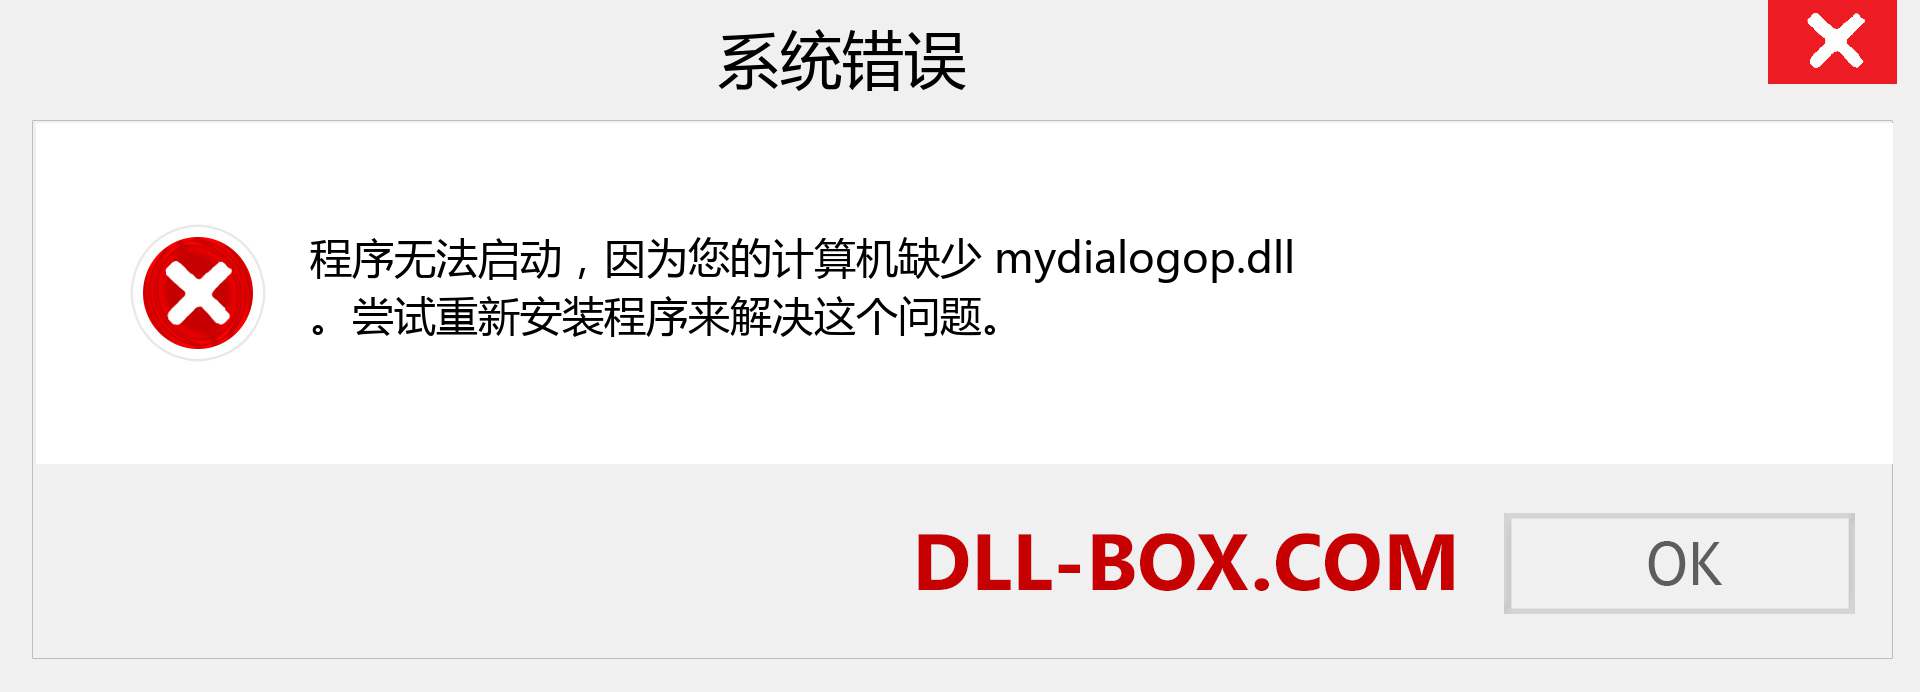 mydialogop.dll 文件丢失？。 适用于 Windows 7、8、10 的下载 - 修复 Windows、照片、图像上的 mydialogop dll 丢失错误